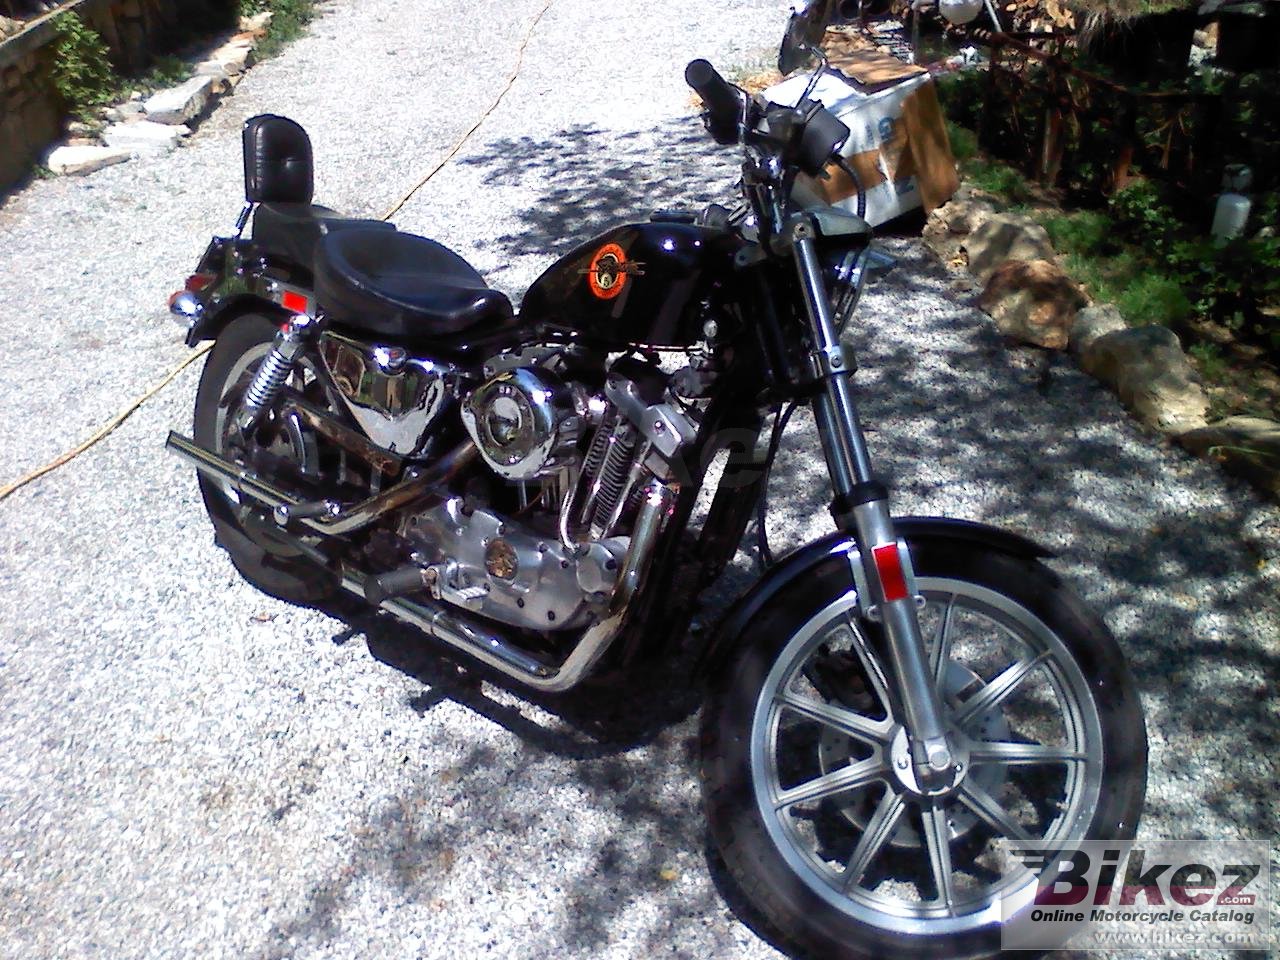 Harley-Davidson XLH 1000 Sportster